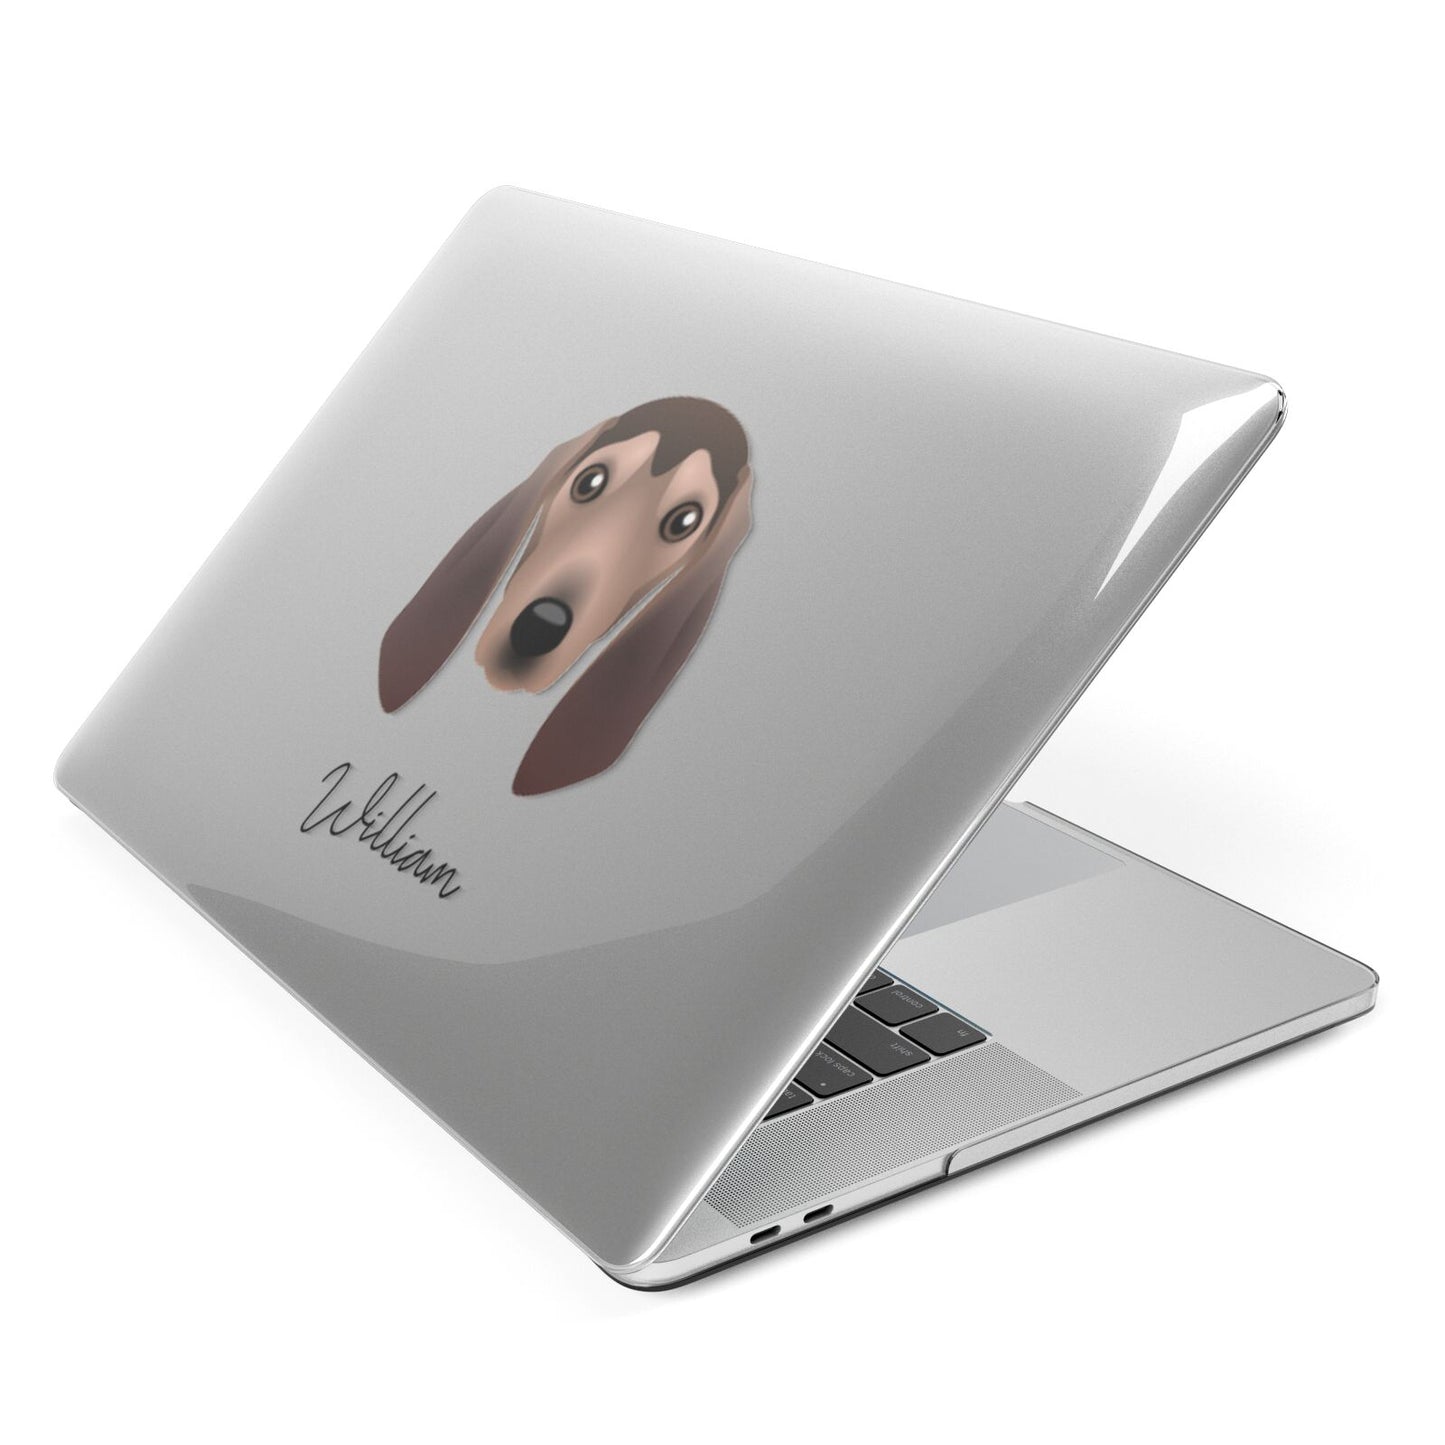 Segugio Italiano Personalised Apple MacBook Case Side View